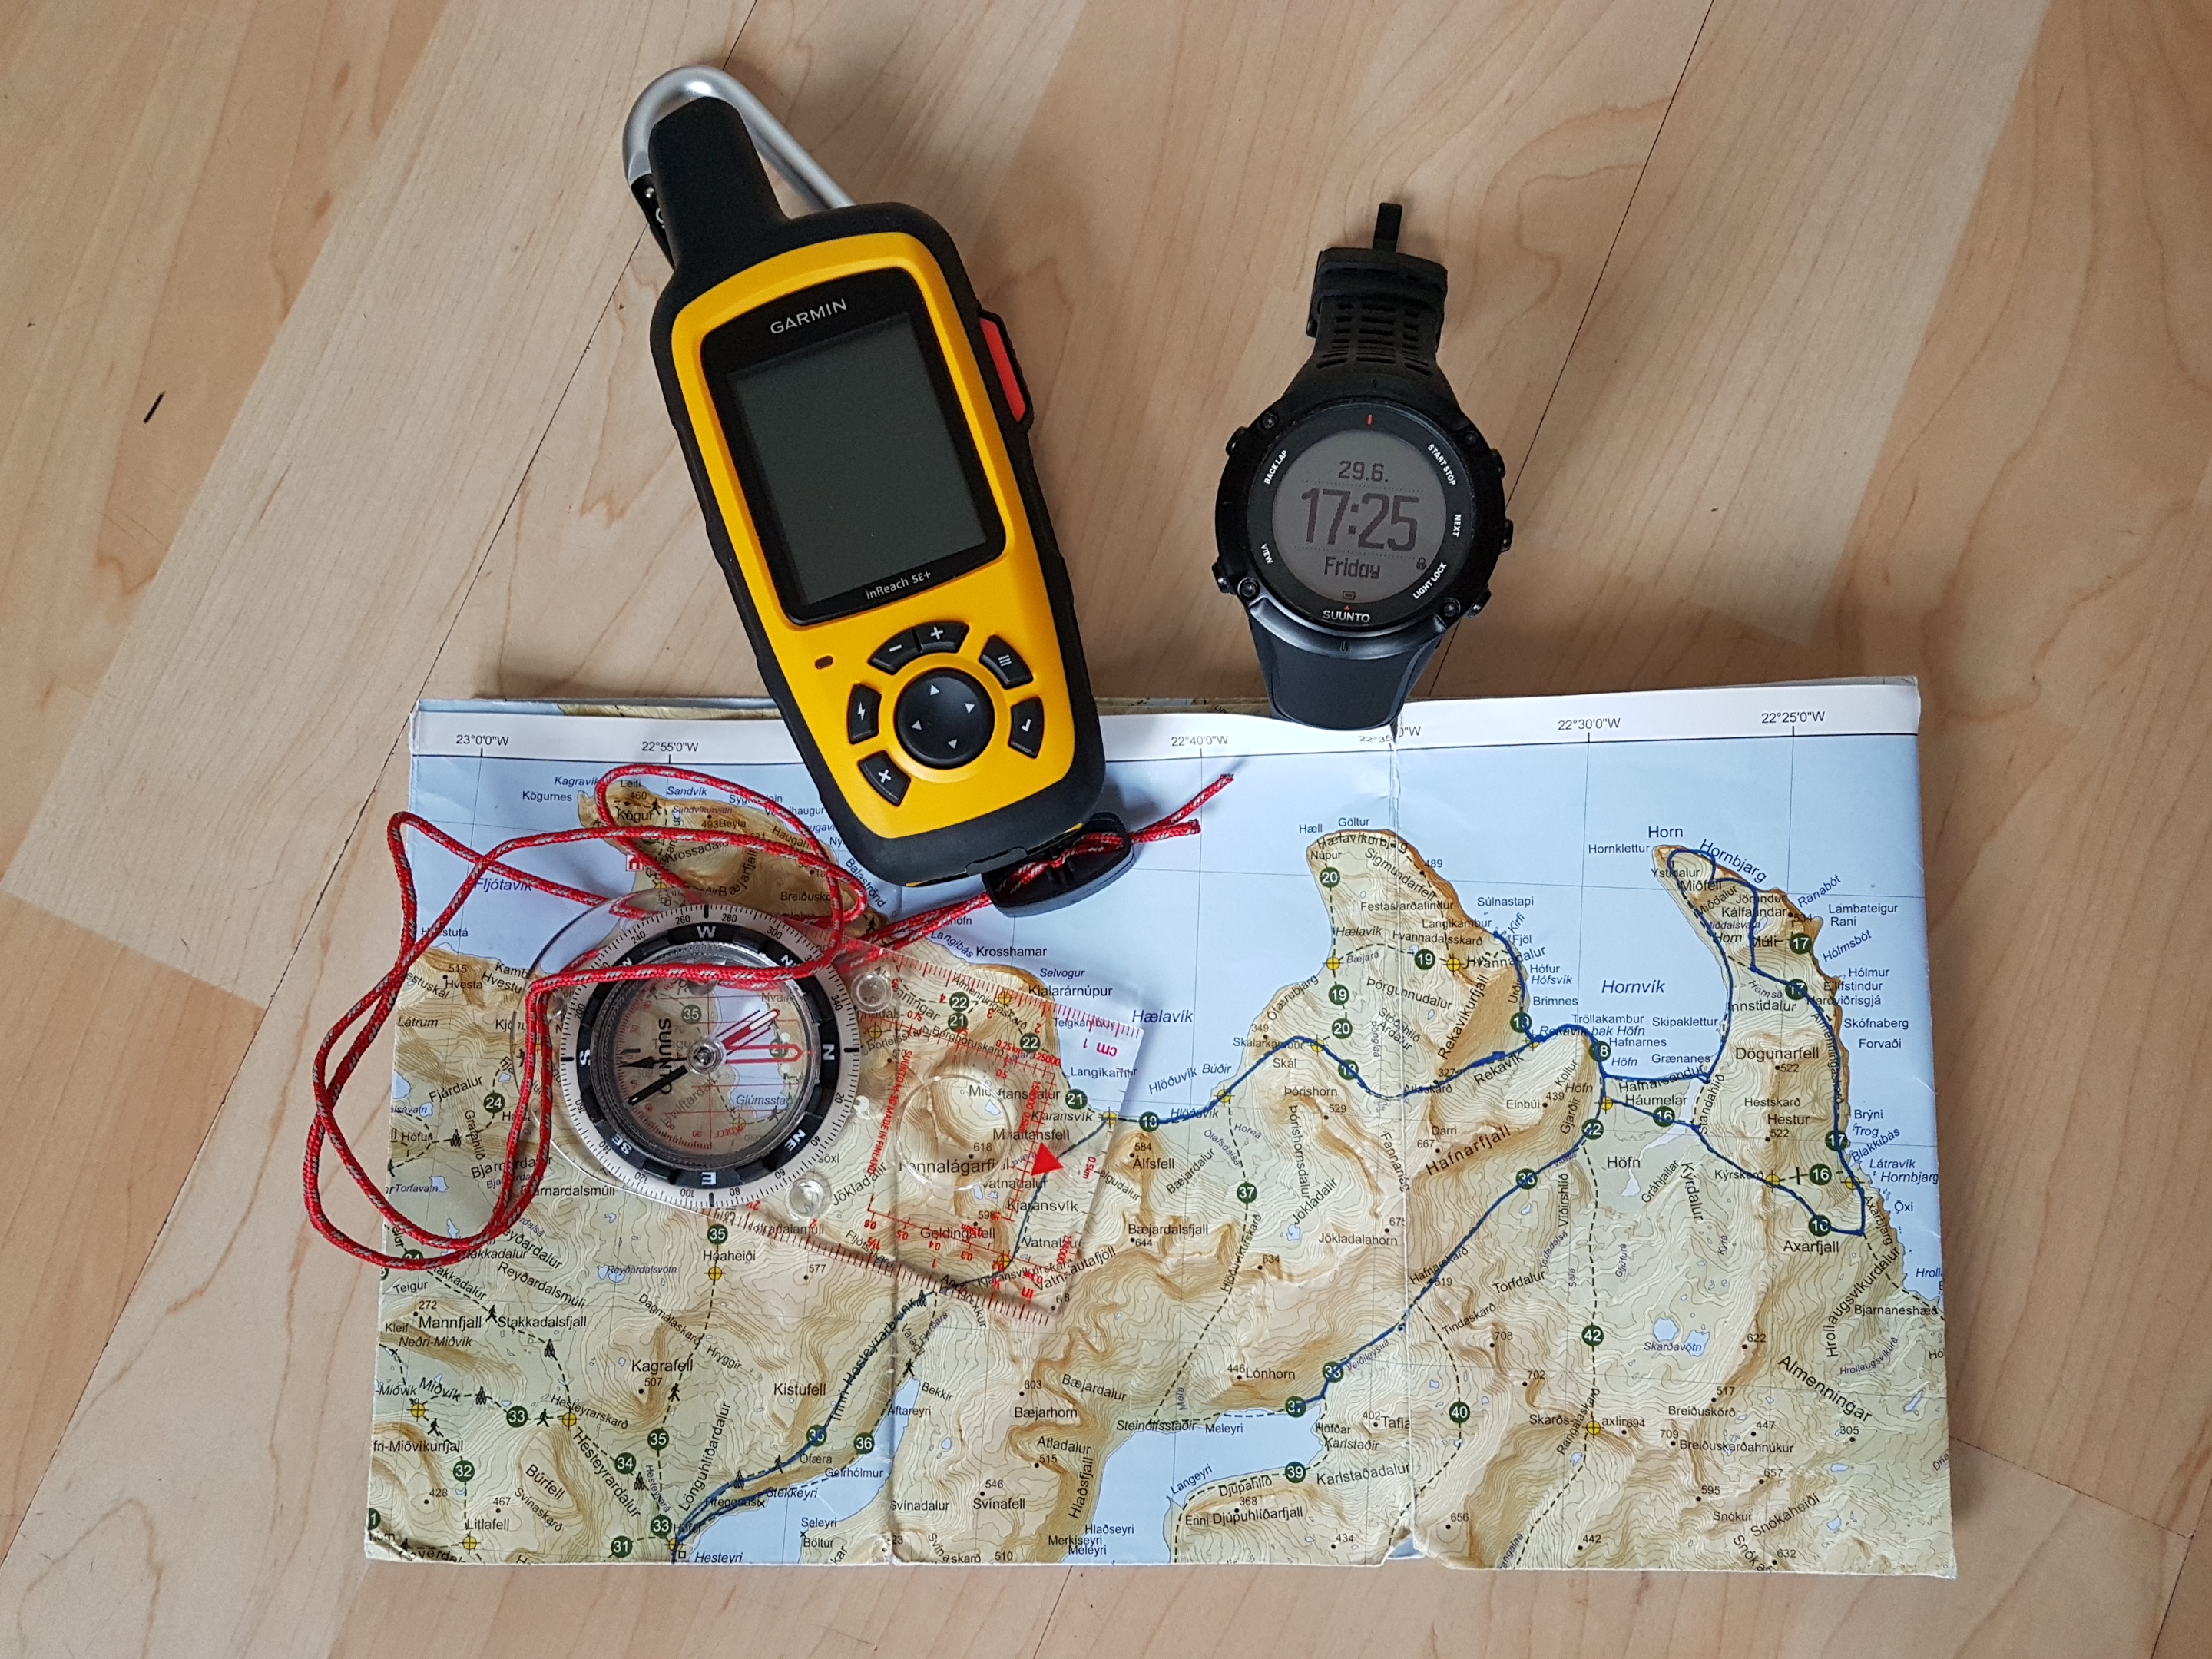 Navigation aids - Garmin InReach SE+, Suunto Ambit3 Peak watch, map and Suunto M3 compass